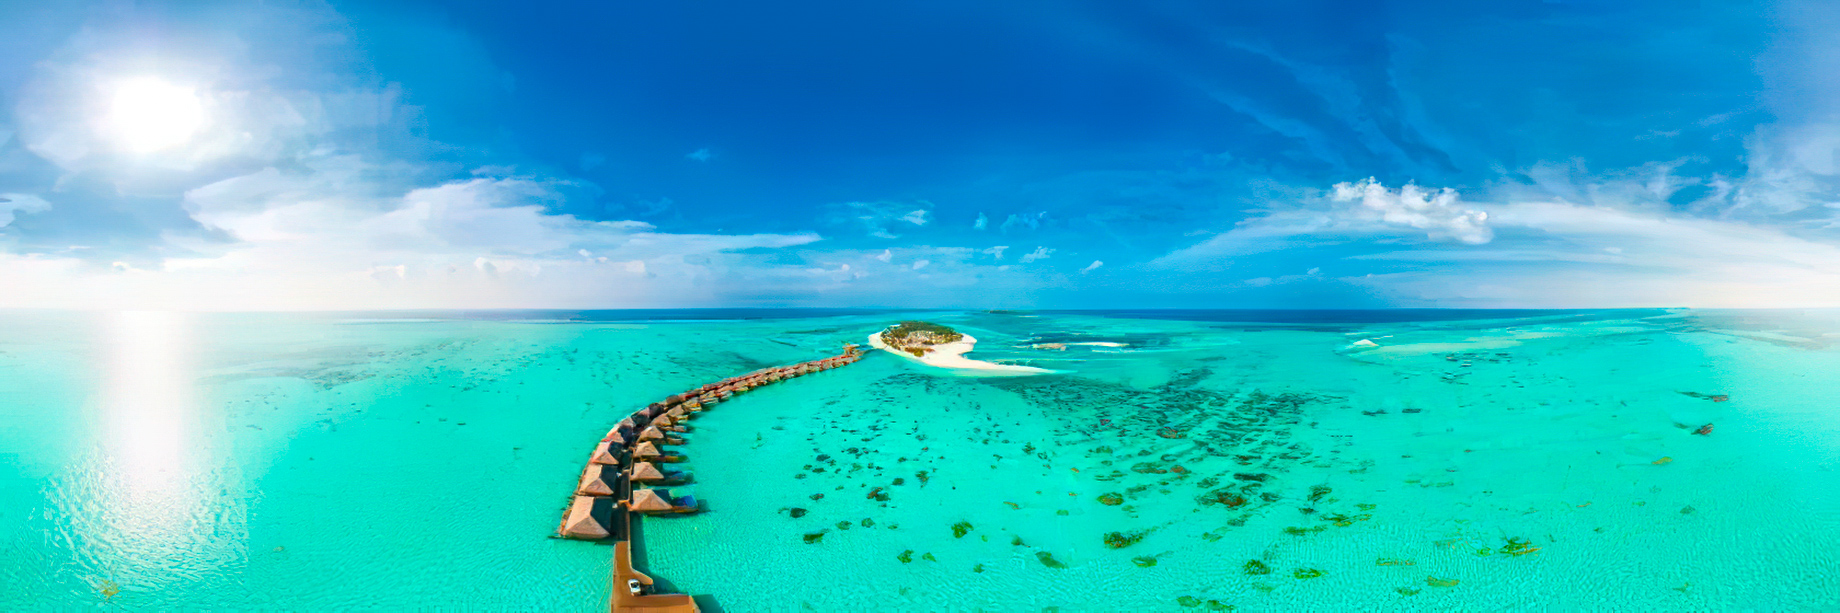 Cocoon Maldives Resort - Ookolhufinolhu, Lhaviyani Atoll, Maldives - Panorama